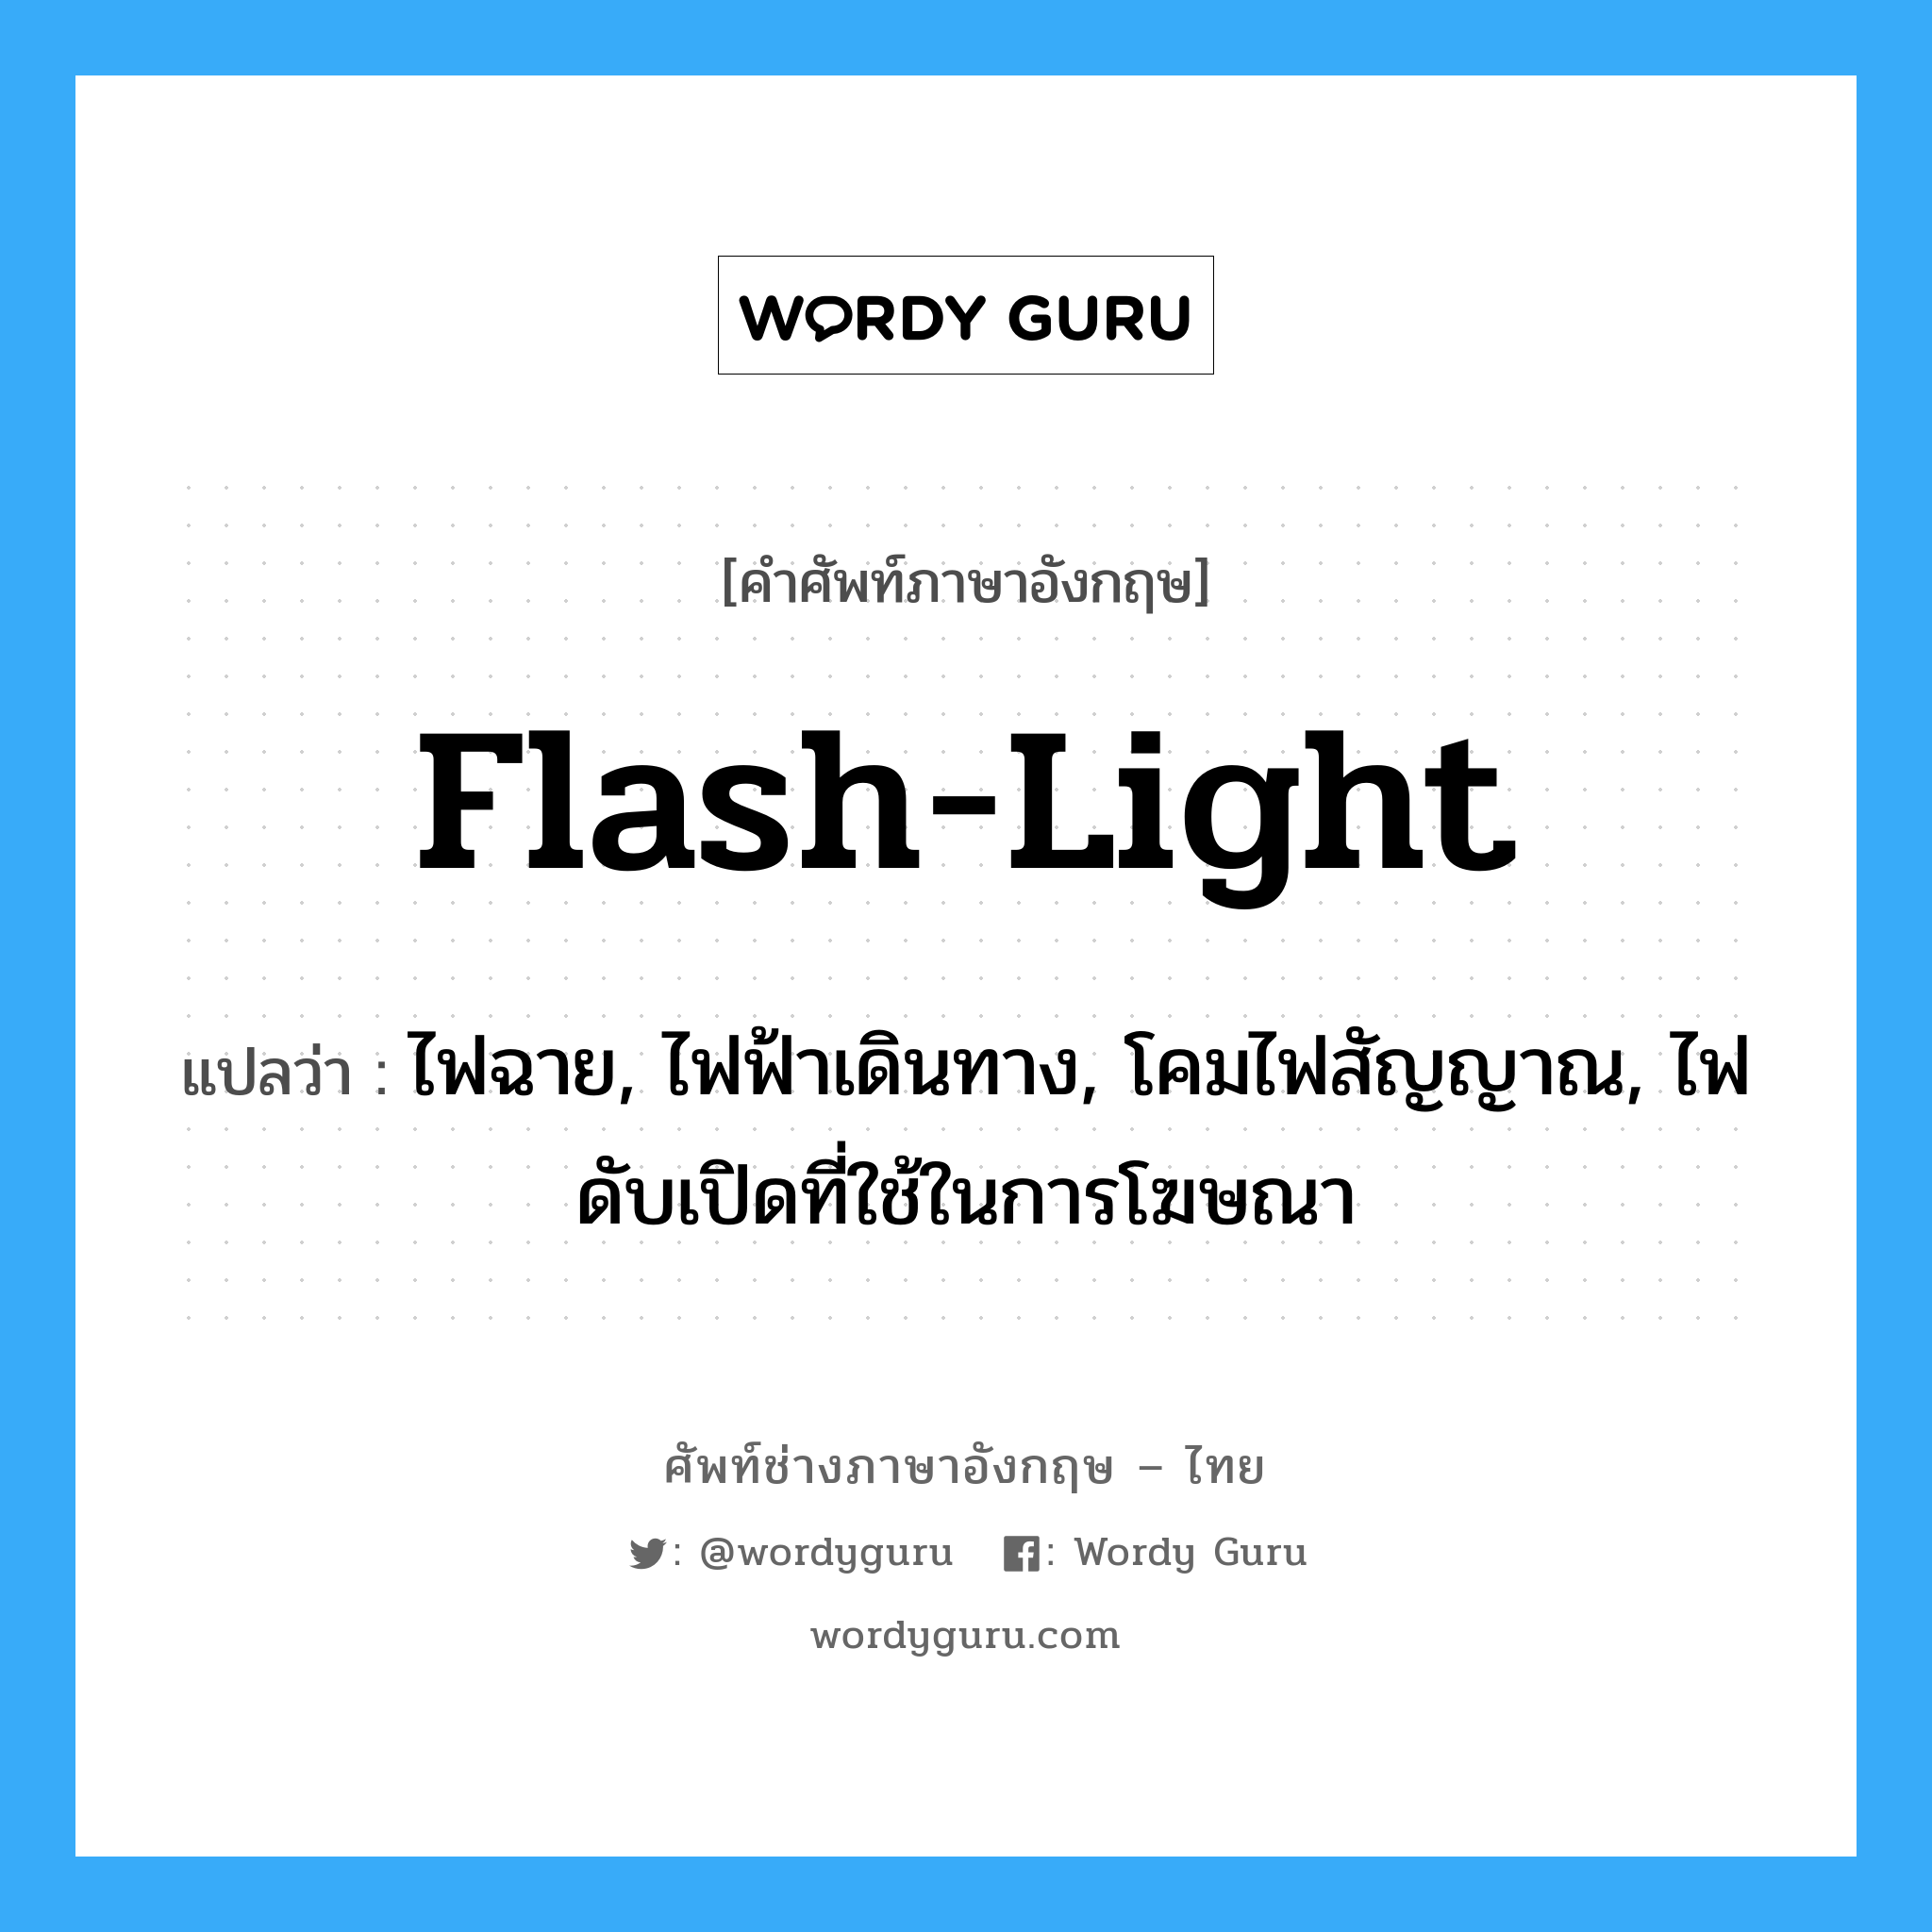 flash-light แปลว่า?, คำศัพท์ช่างภาษาอังกฤษ - ไทย flash-light คำศัพท์ภาษาอังกฤษ flash-light แปลว่า ไฟฉาย, ไฟฟ้าเดินทาง, โคมไฟสัญญาณ, ไฟดับเปิดที่ใช้ในการโฆษณา